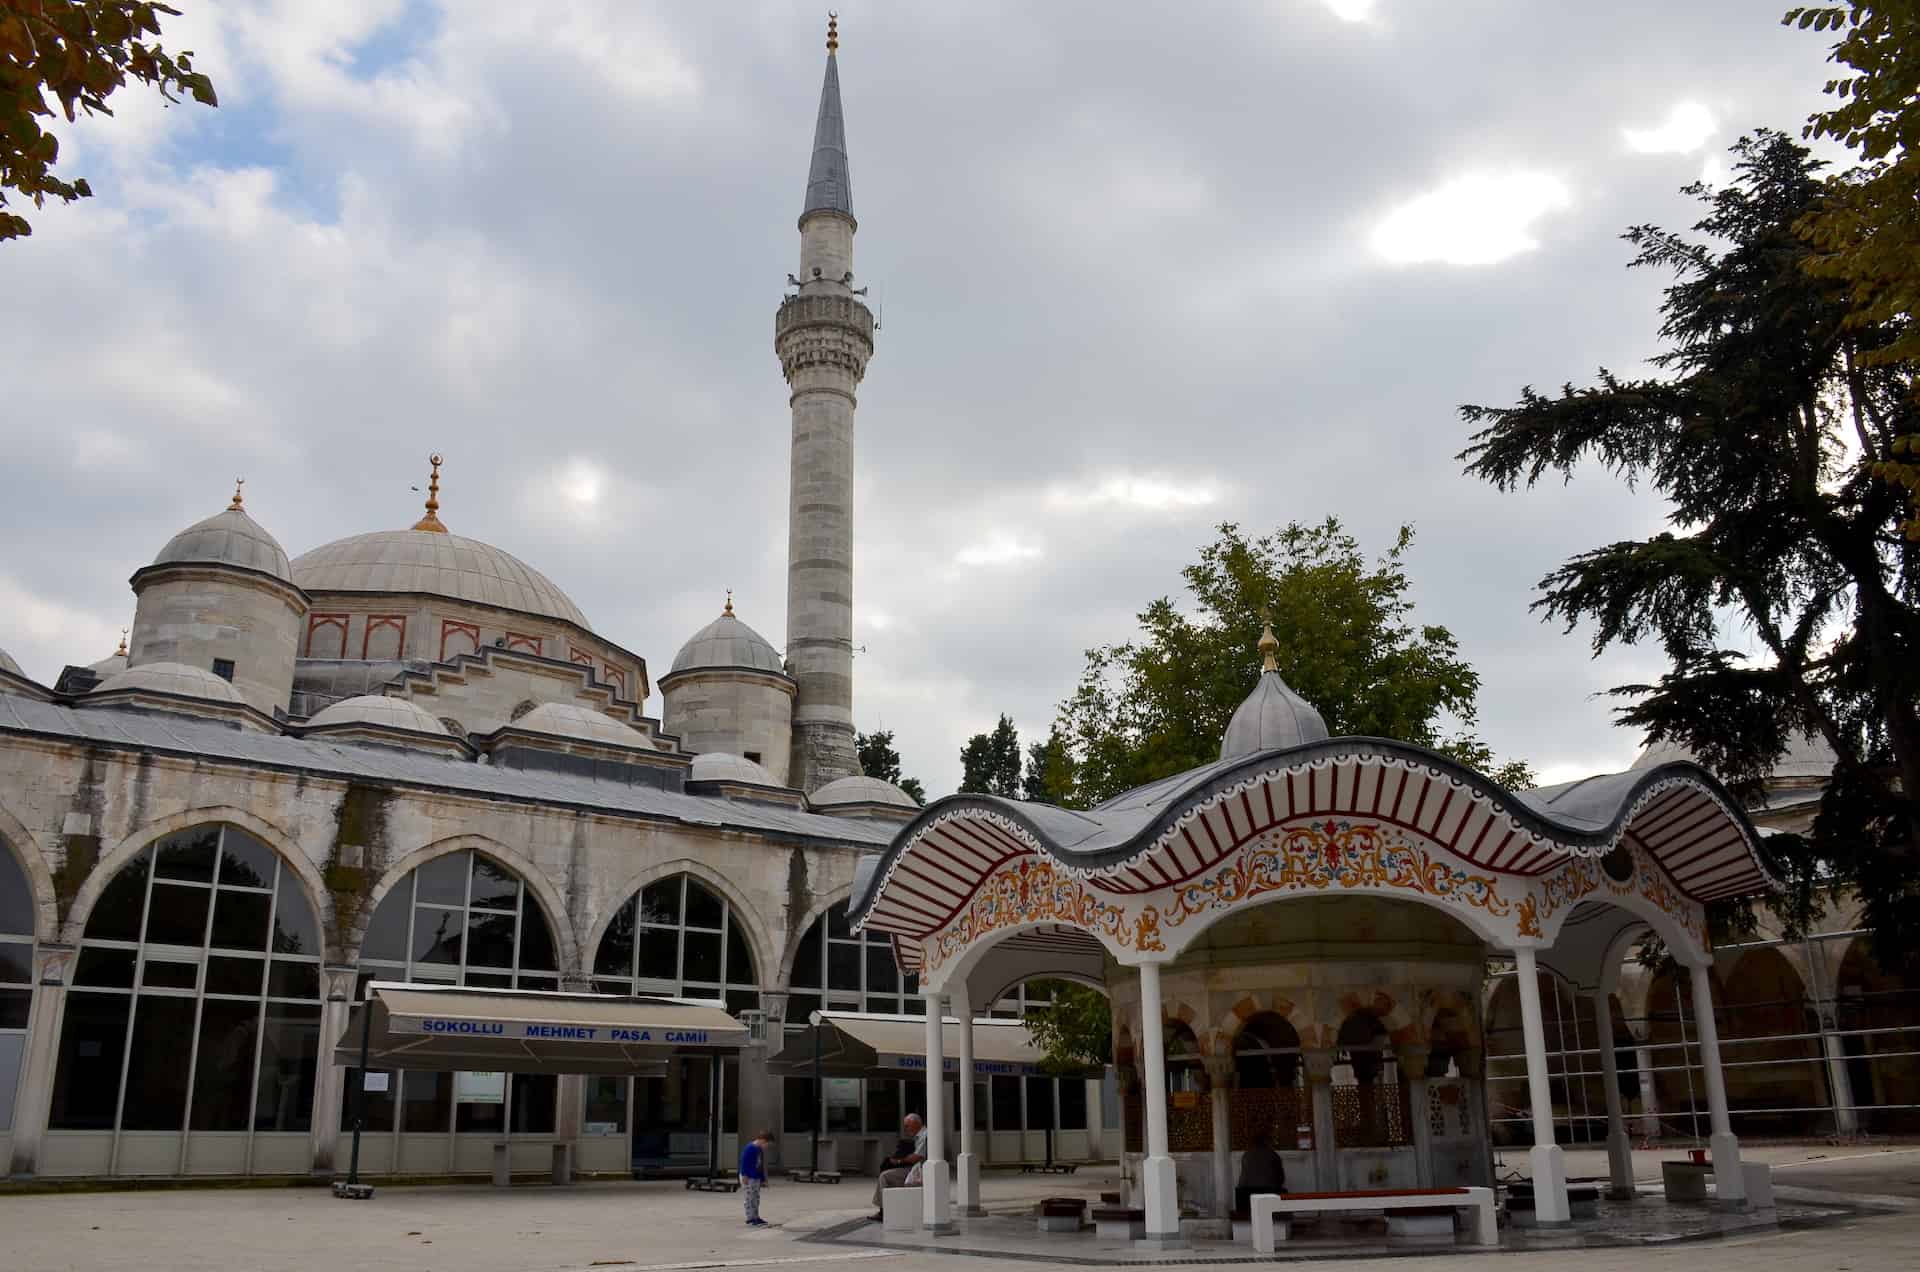 Sokollu Mehmed Pasha Mosque in Lüleburgaz, Turkey